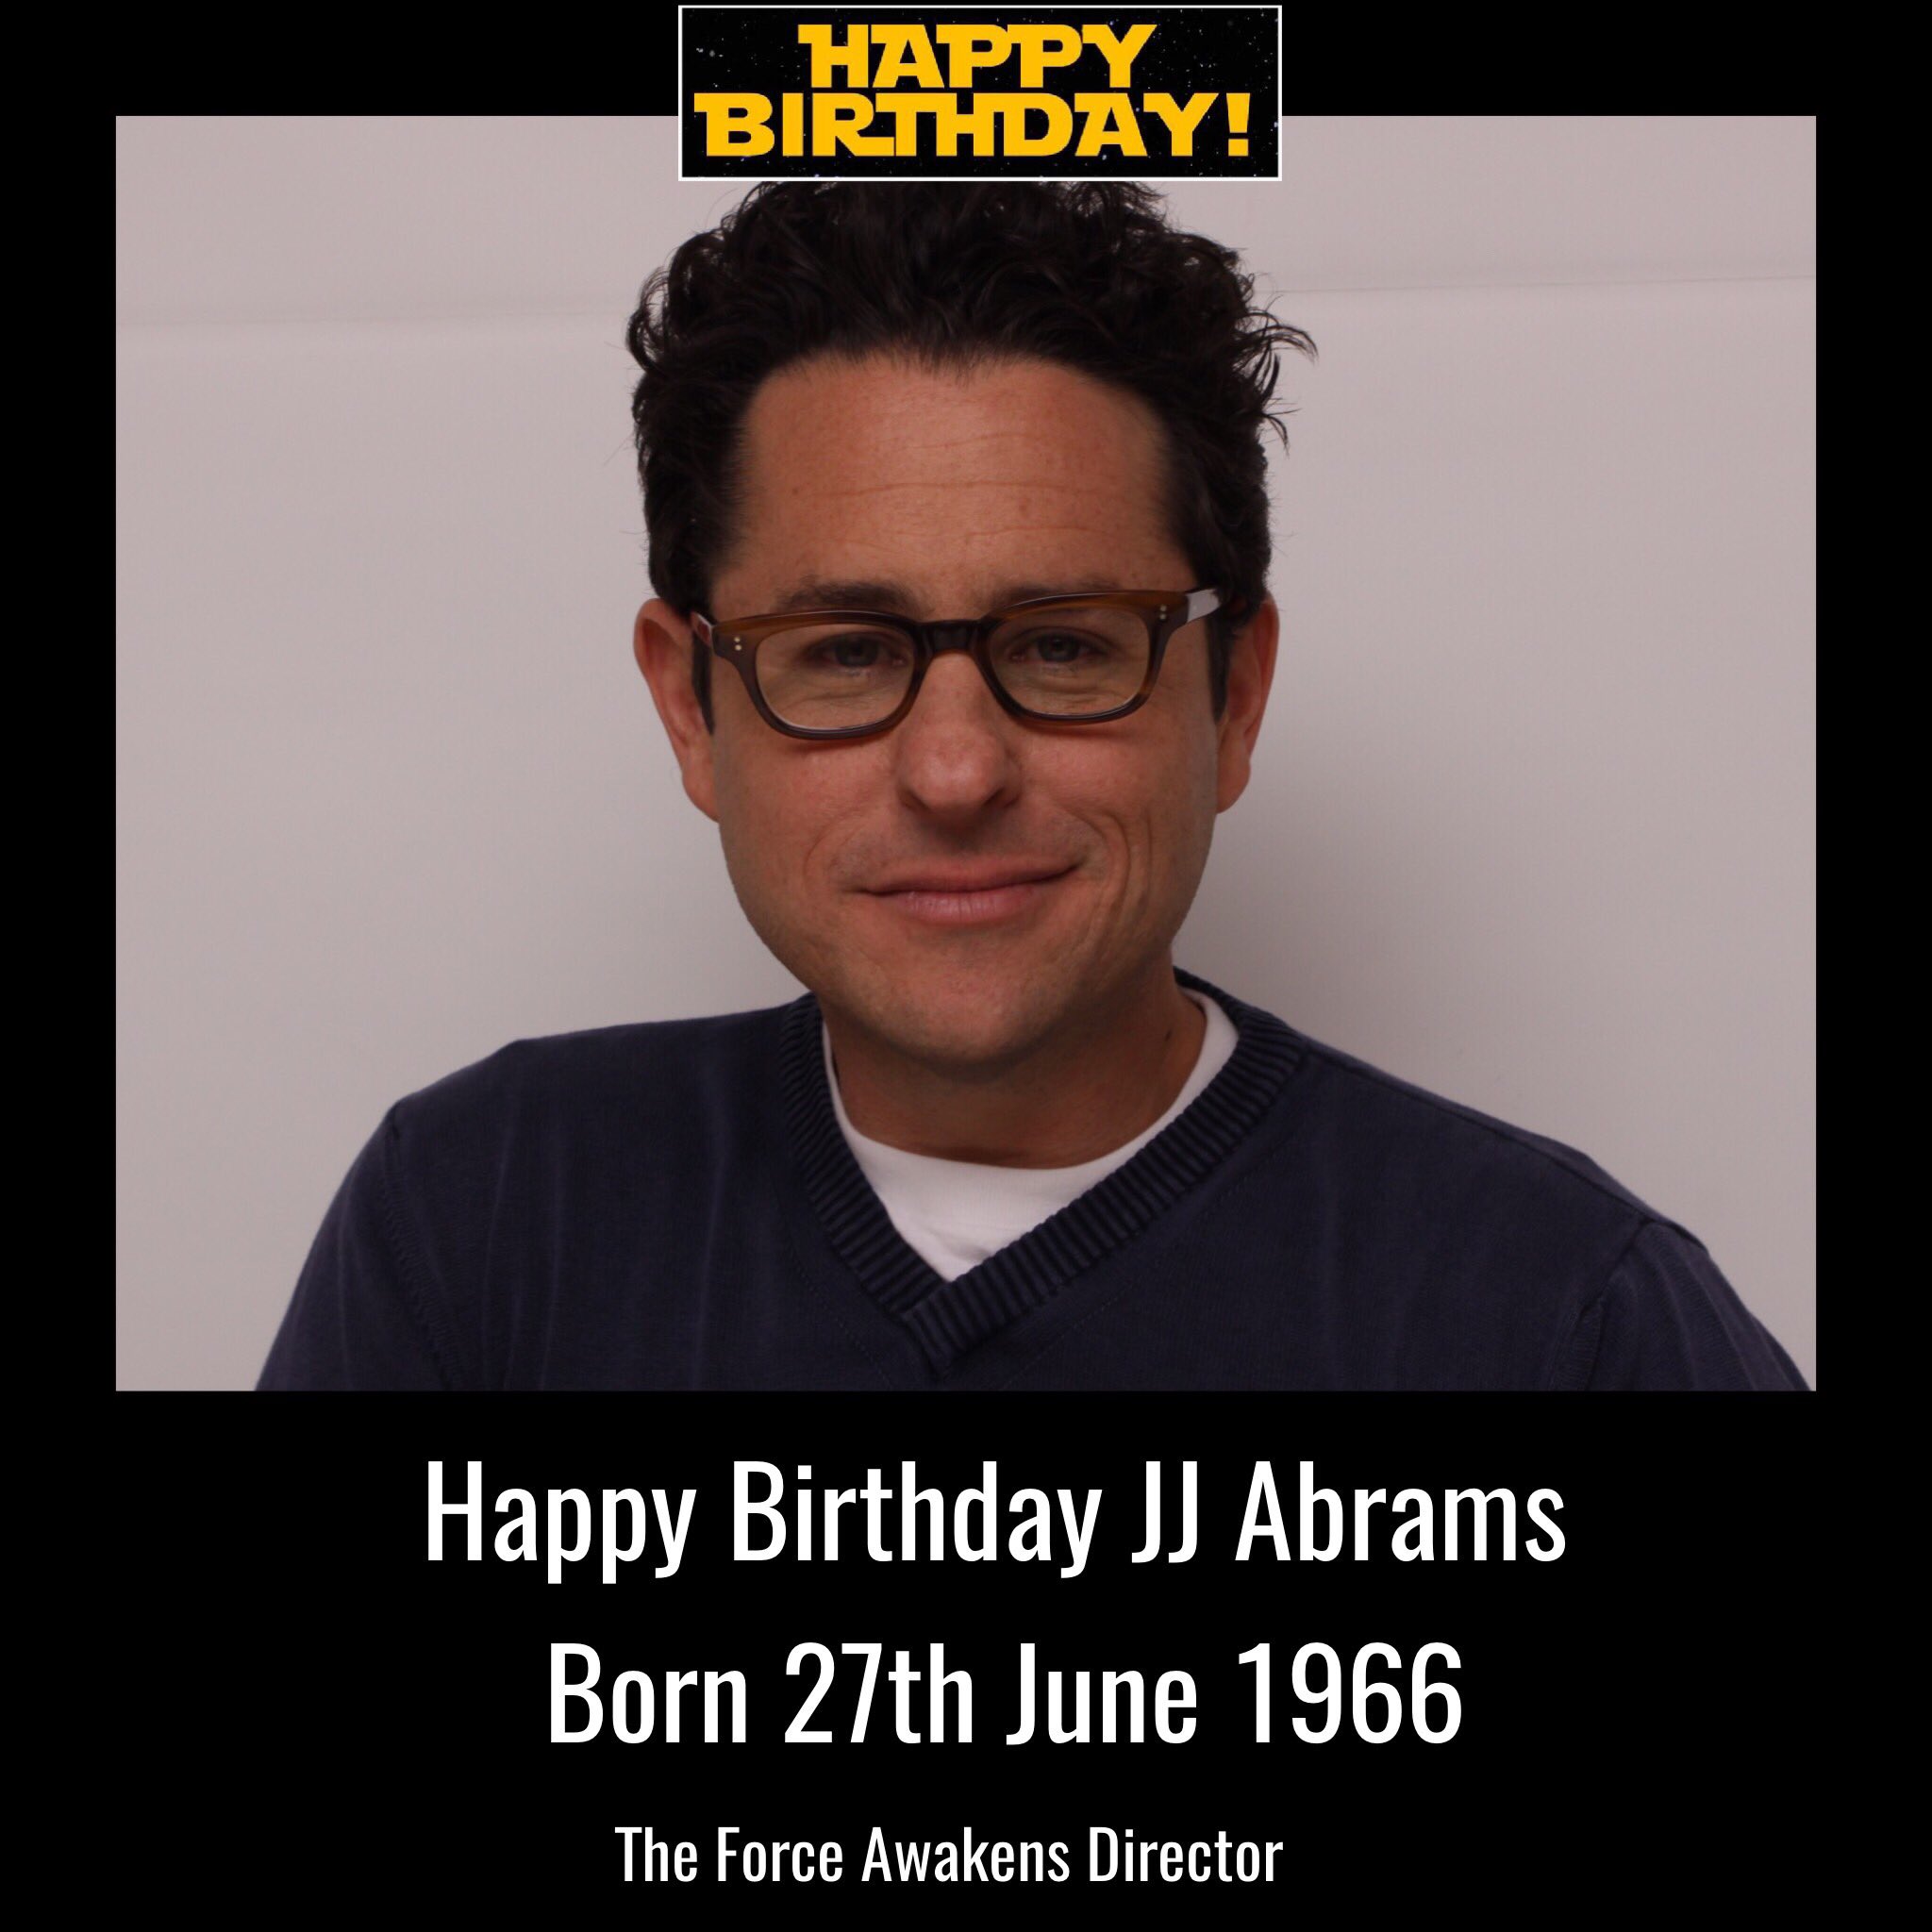 Happy Birthday JJ Abrams, born 27th June 1966.  